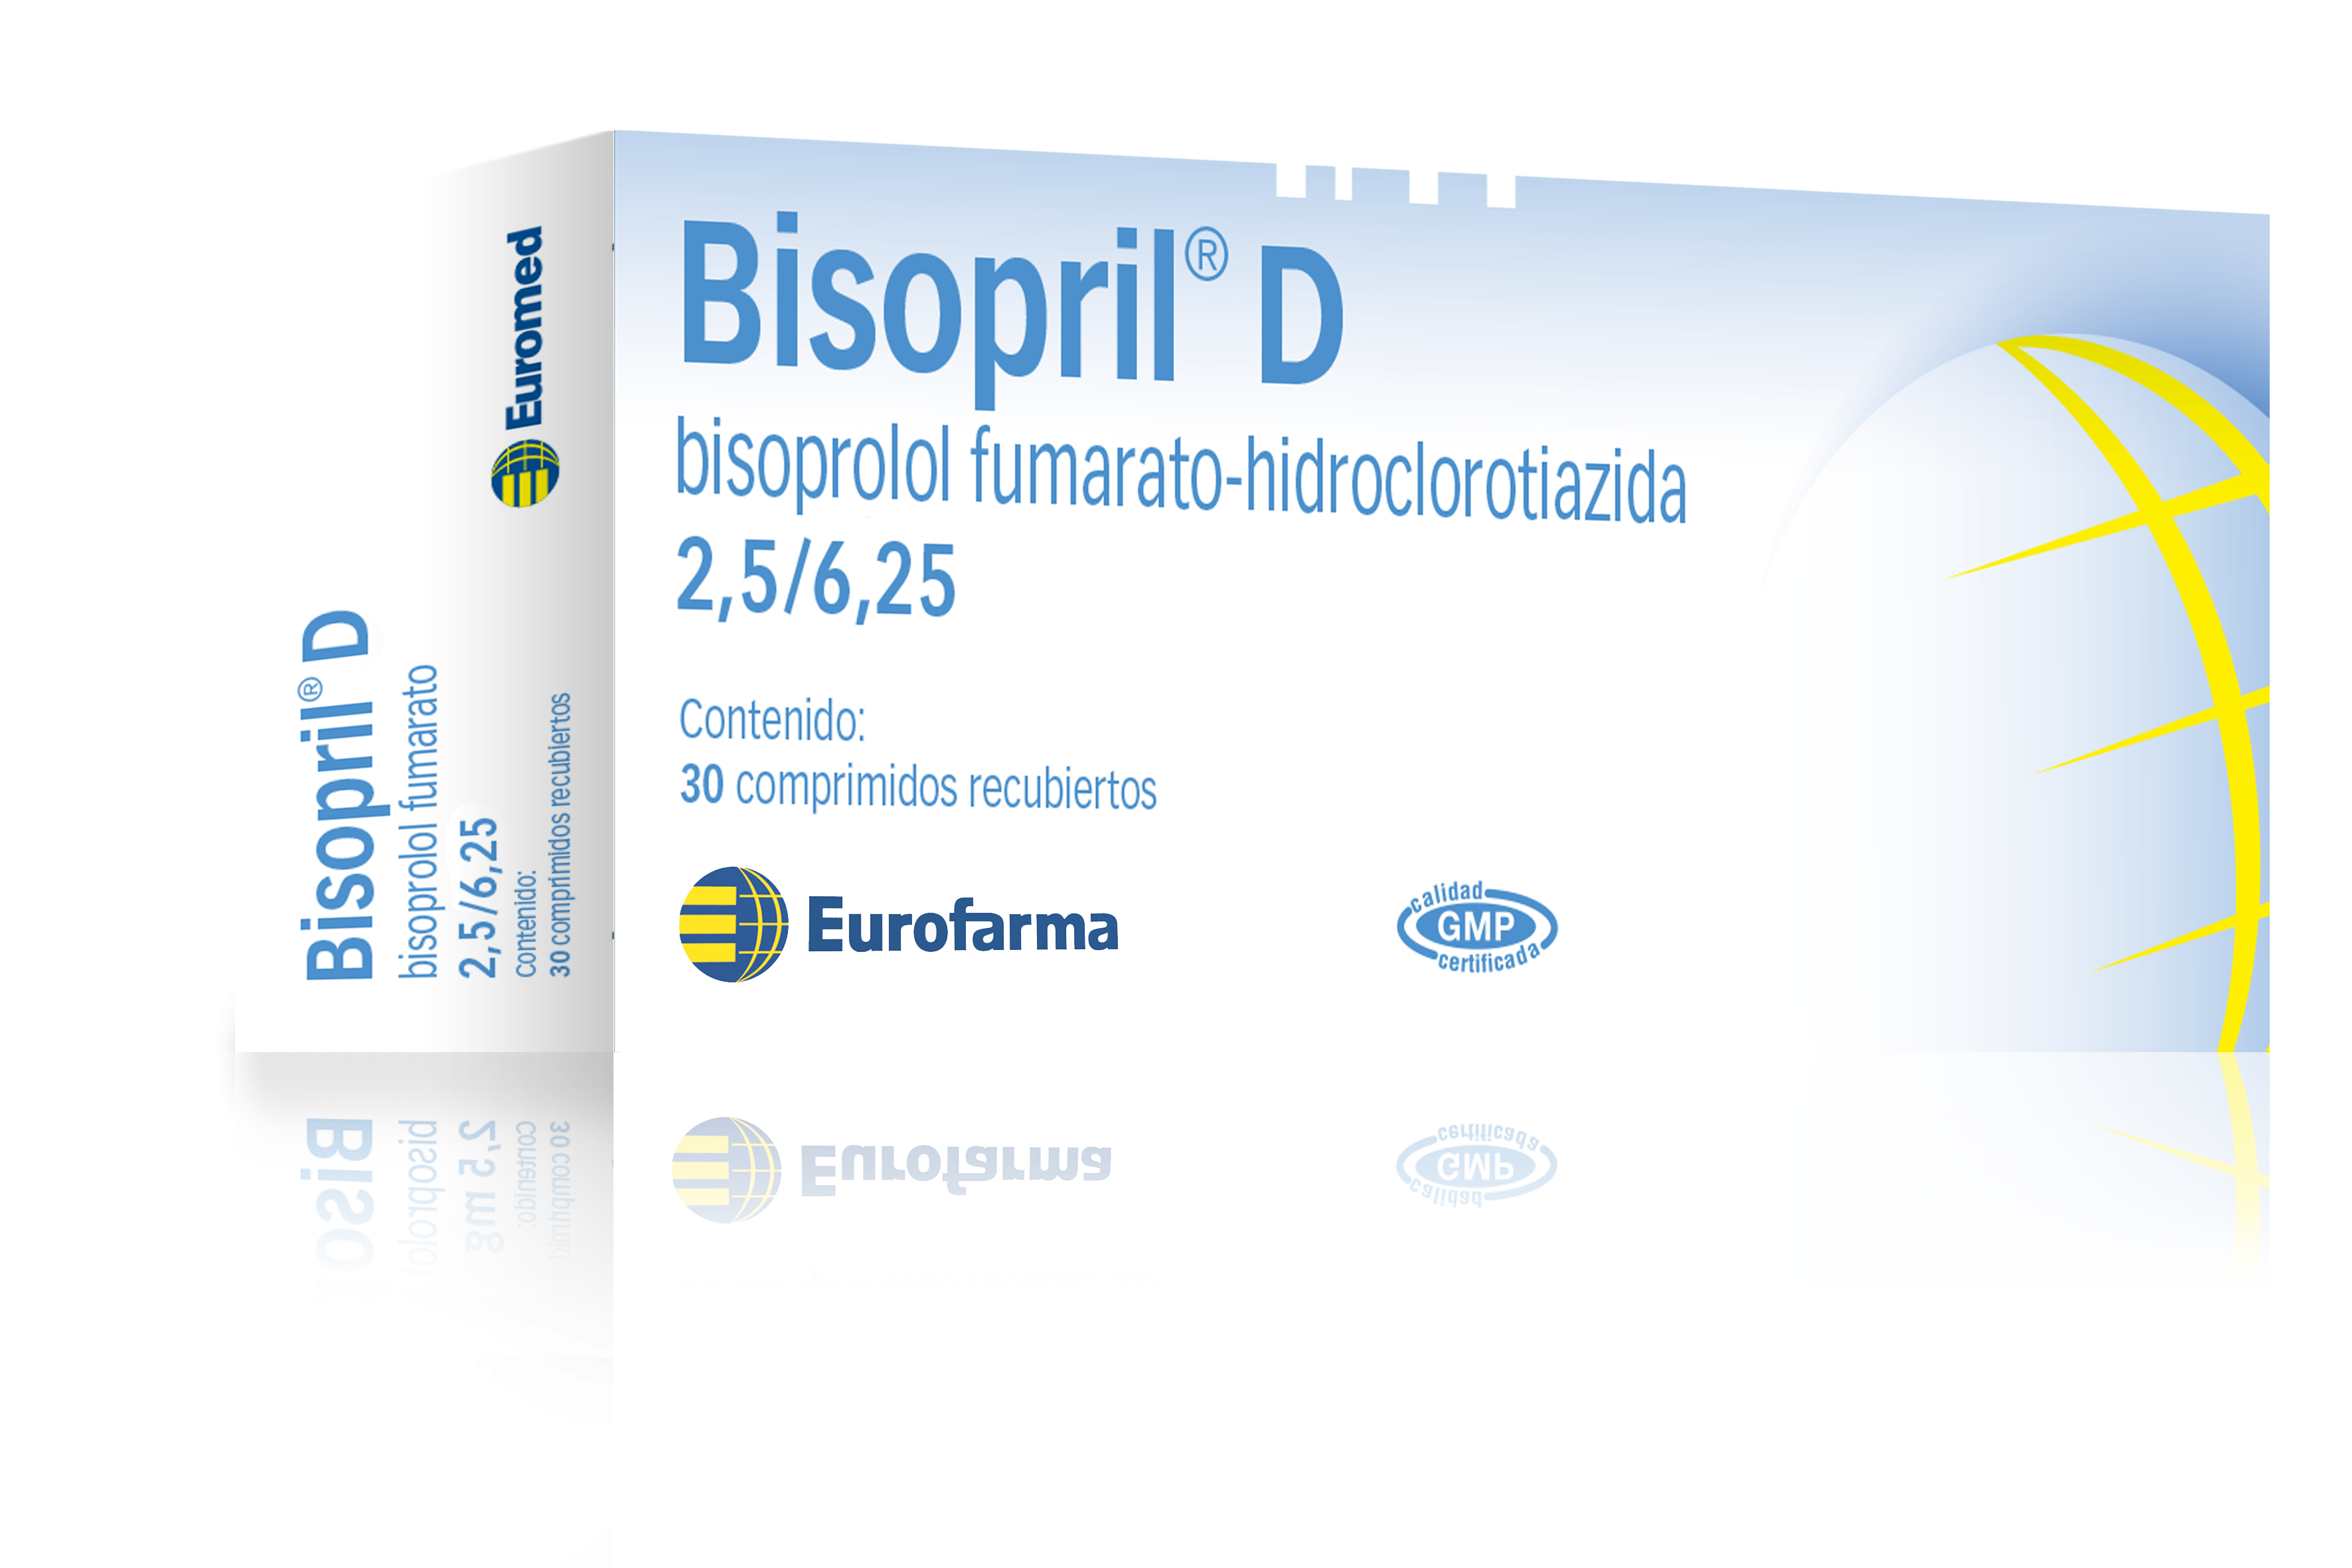 Bisopril D - 2,5 mg / 6,25 mg